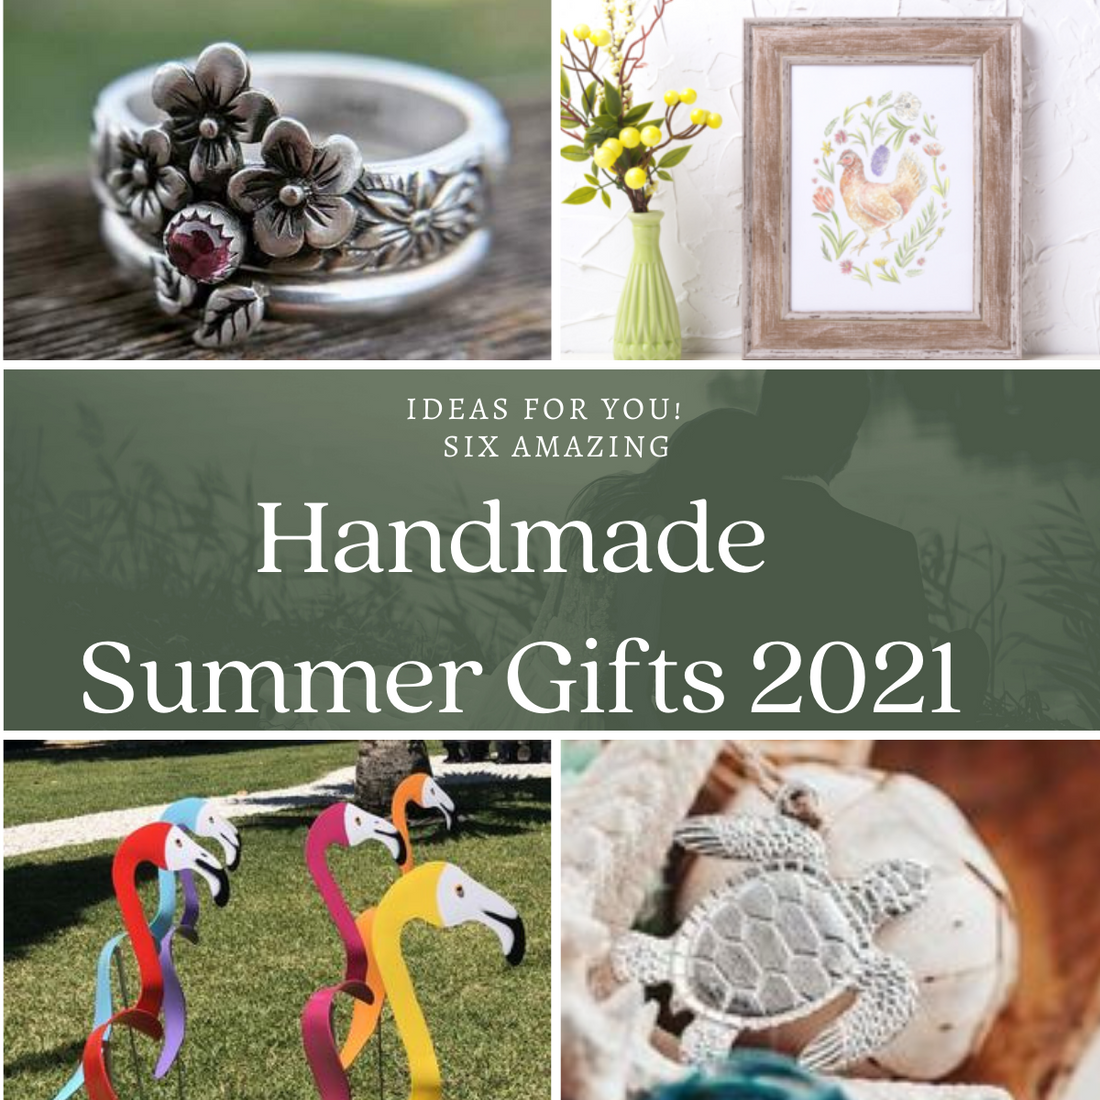 Top Handmade Summer Gift Ideas for 2021